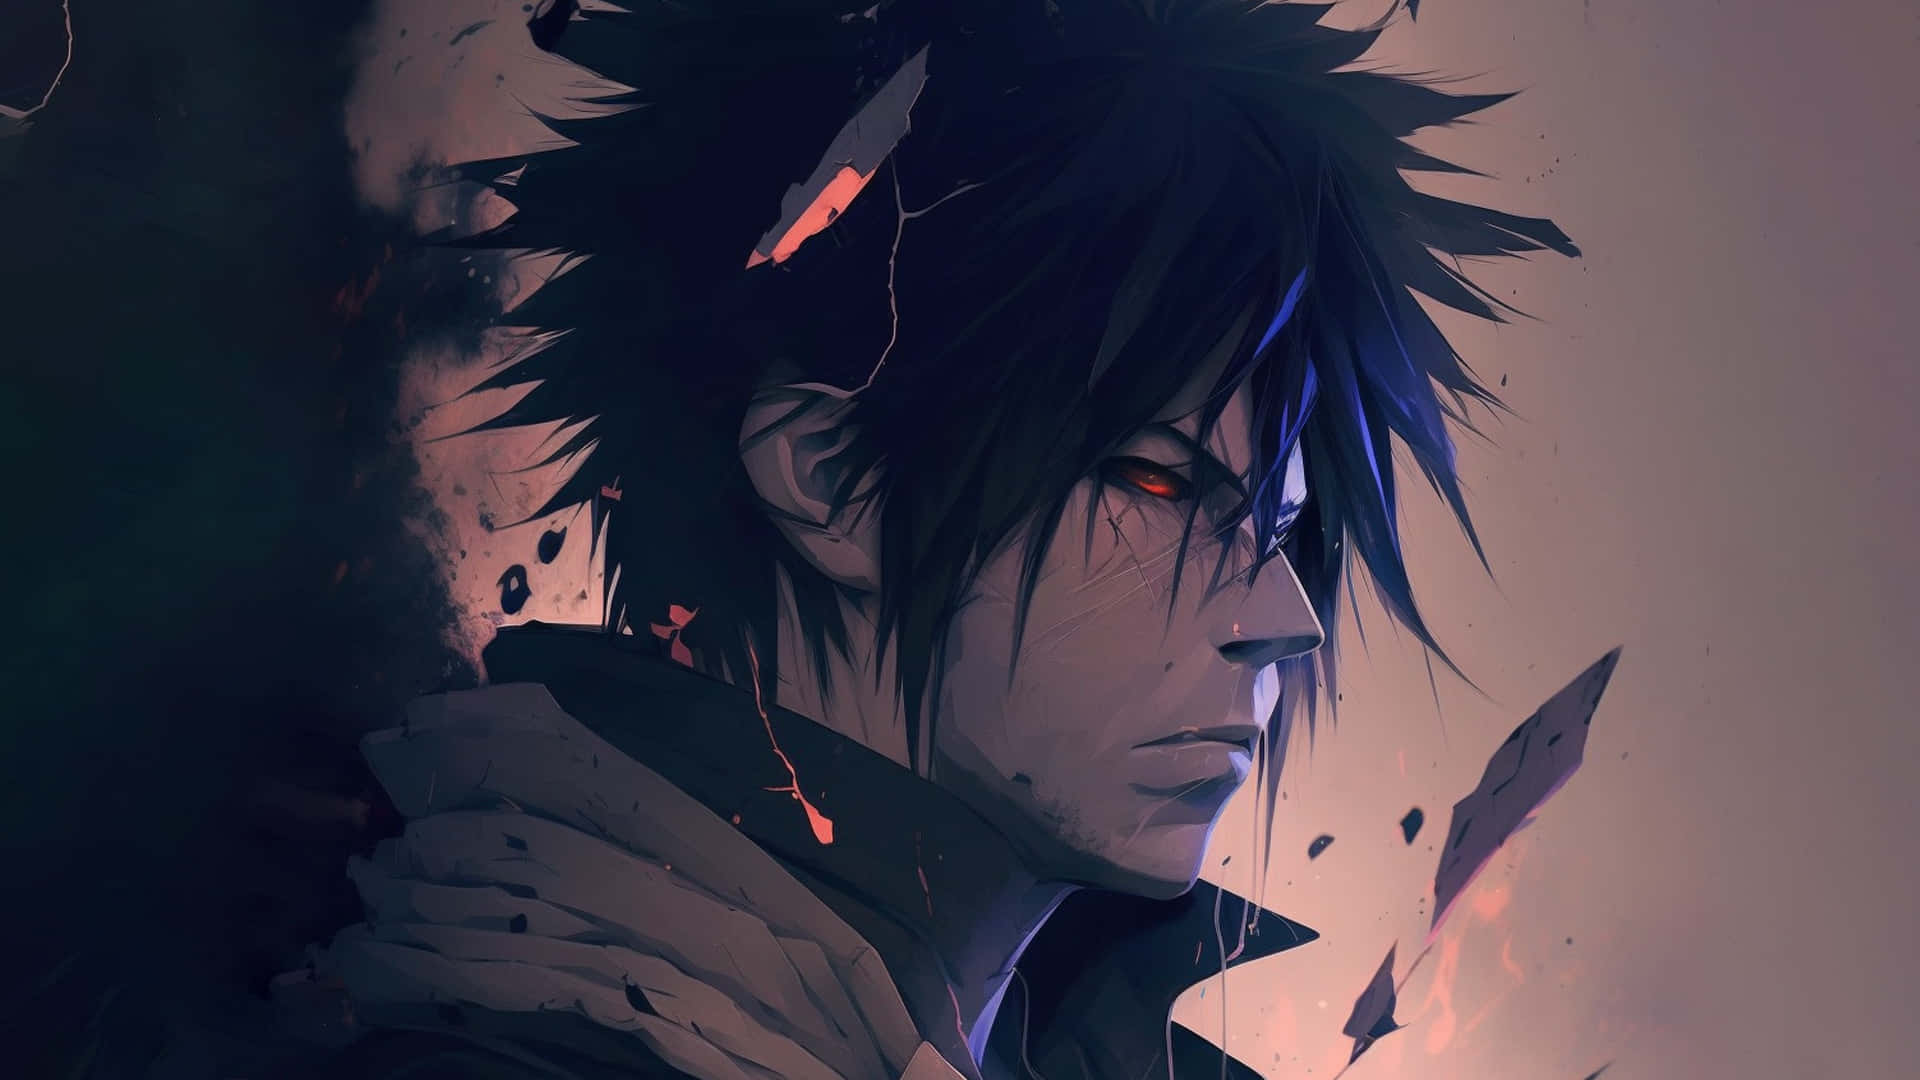 Sasuke Background